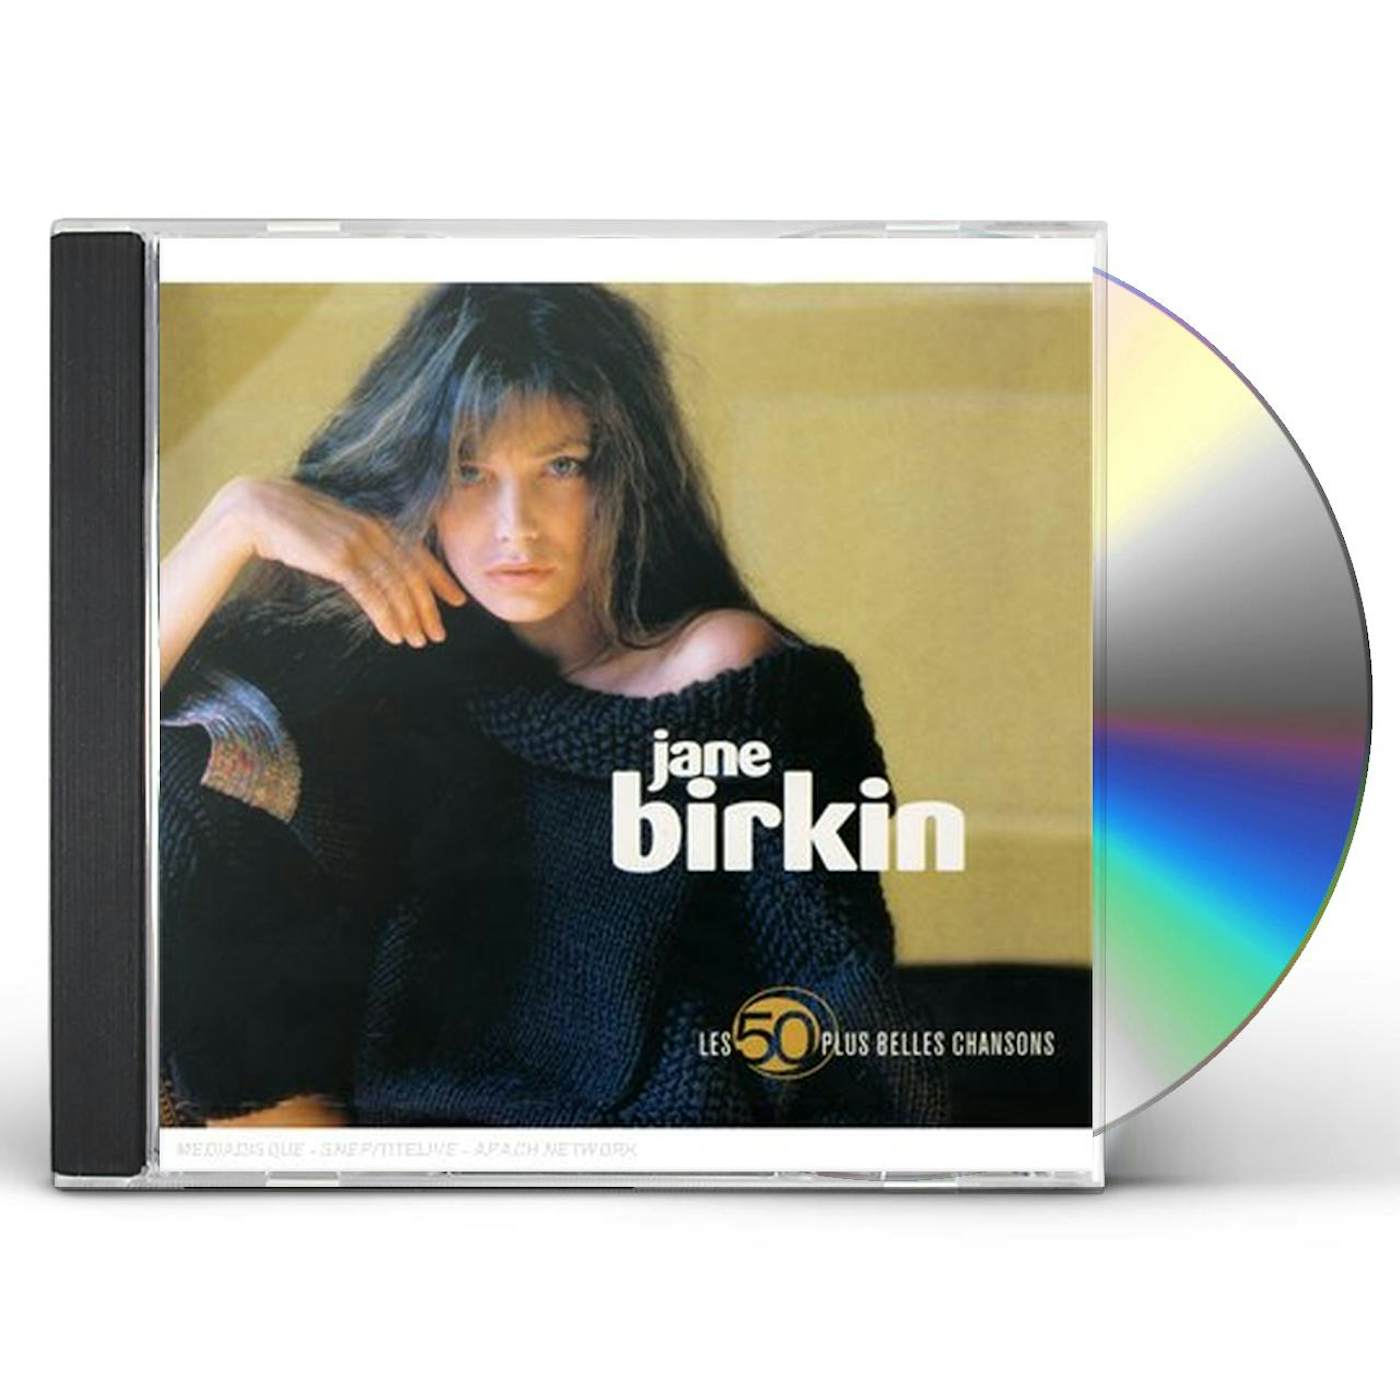 Jane Birkin - 50 Plus Belles Chansons [CD] 